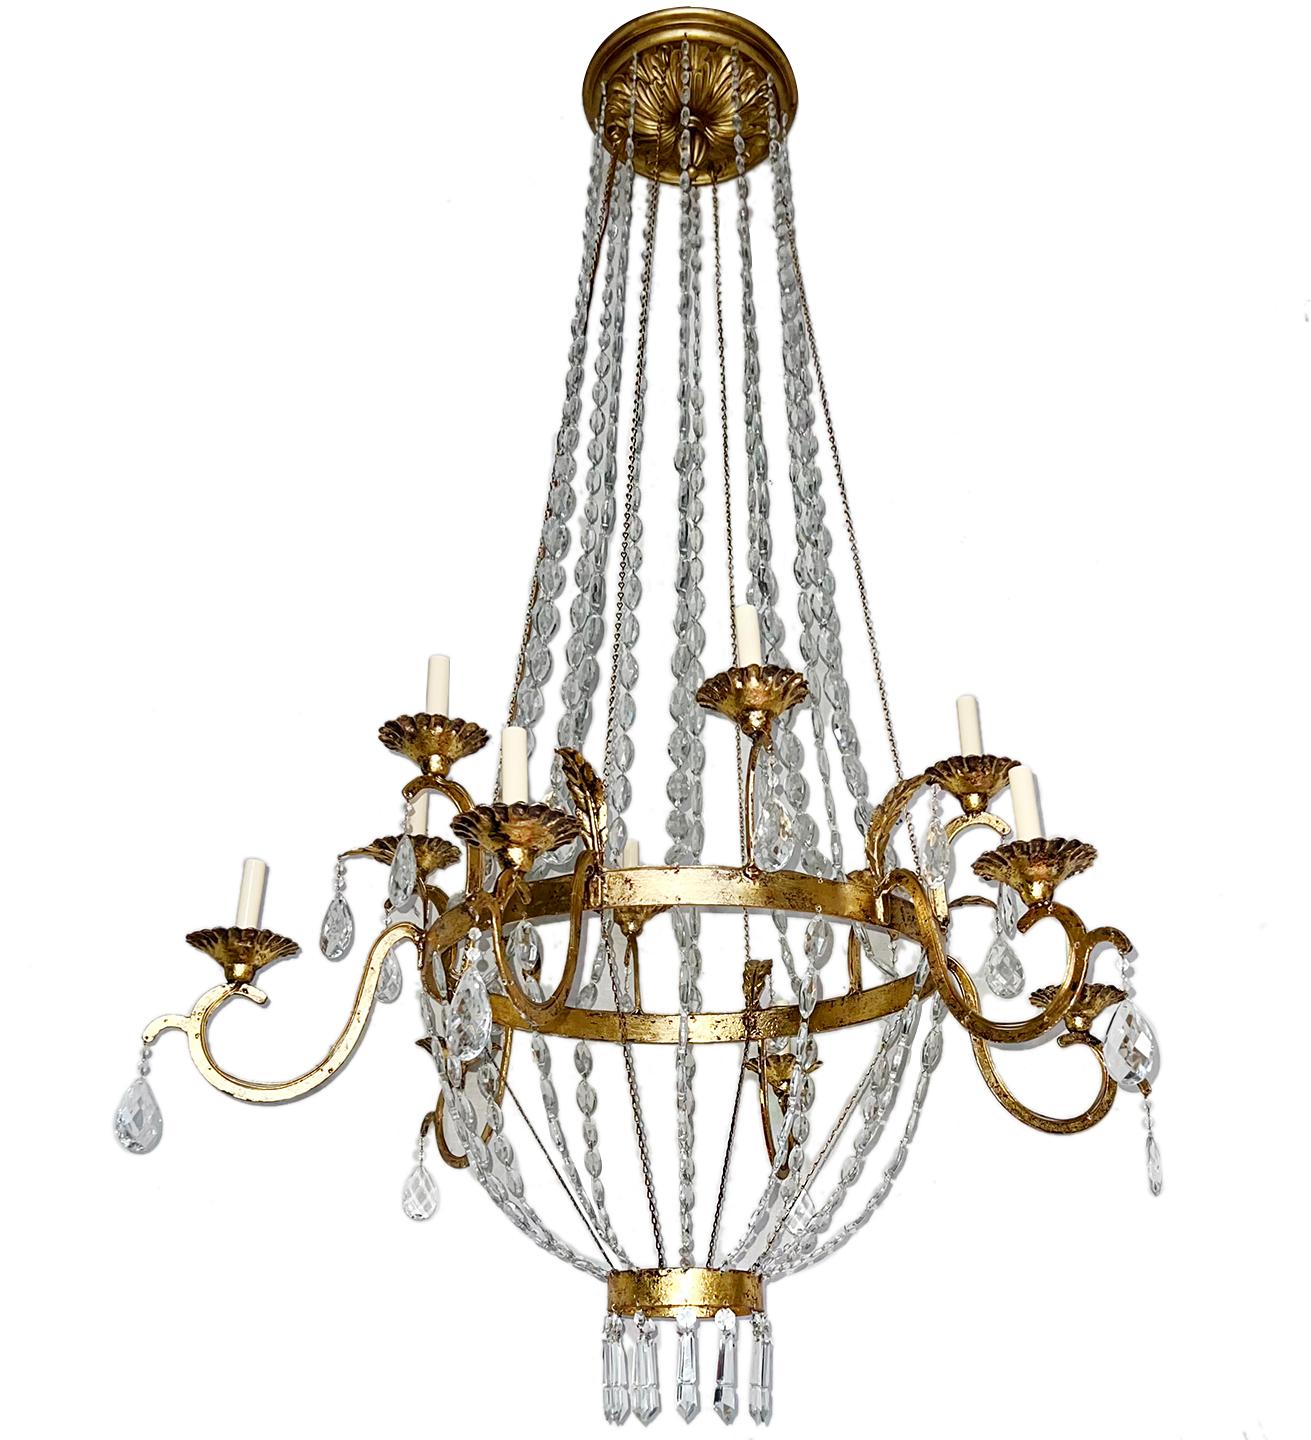 A circa 1900s Scandinavian chandelier with 12 lights.

Measurements:
Height: 81